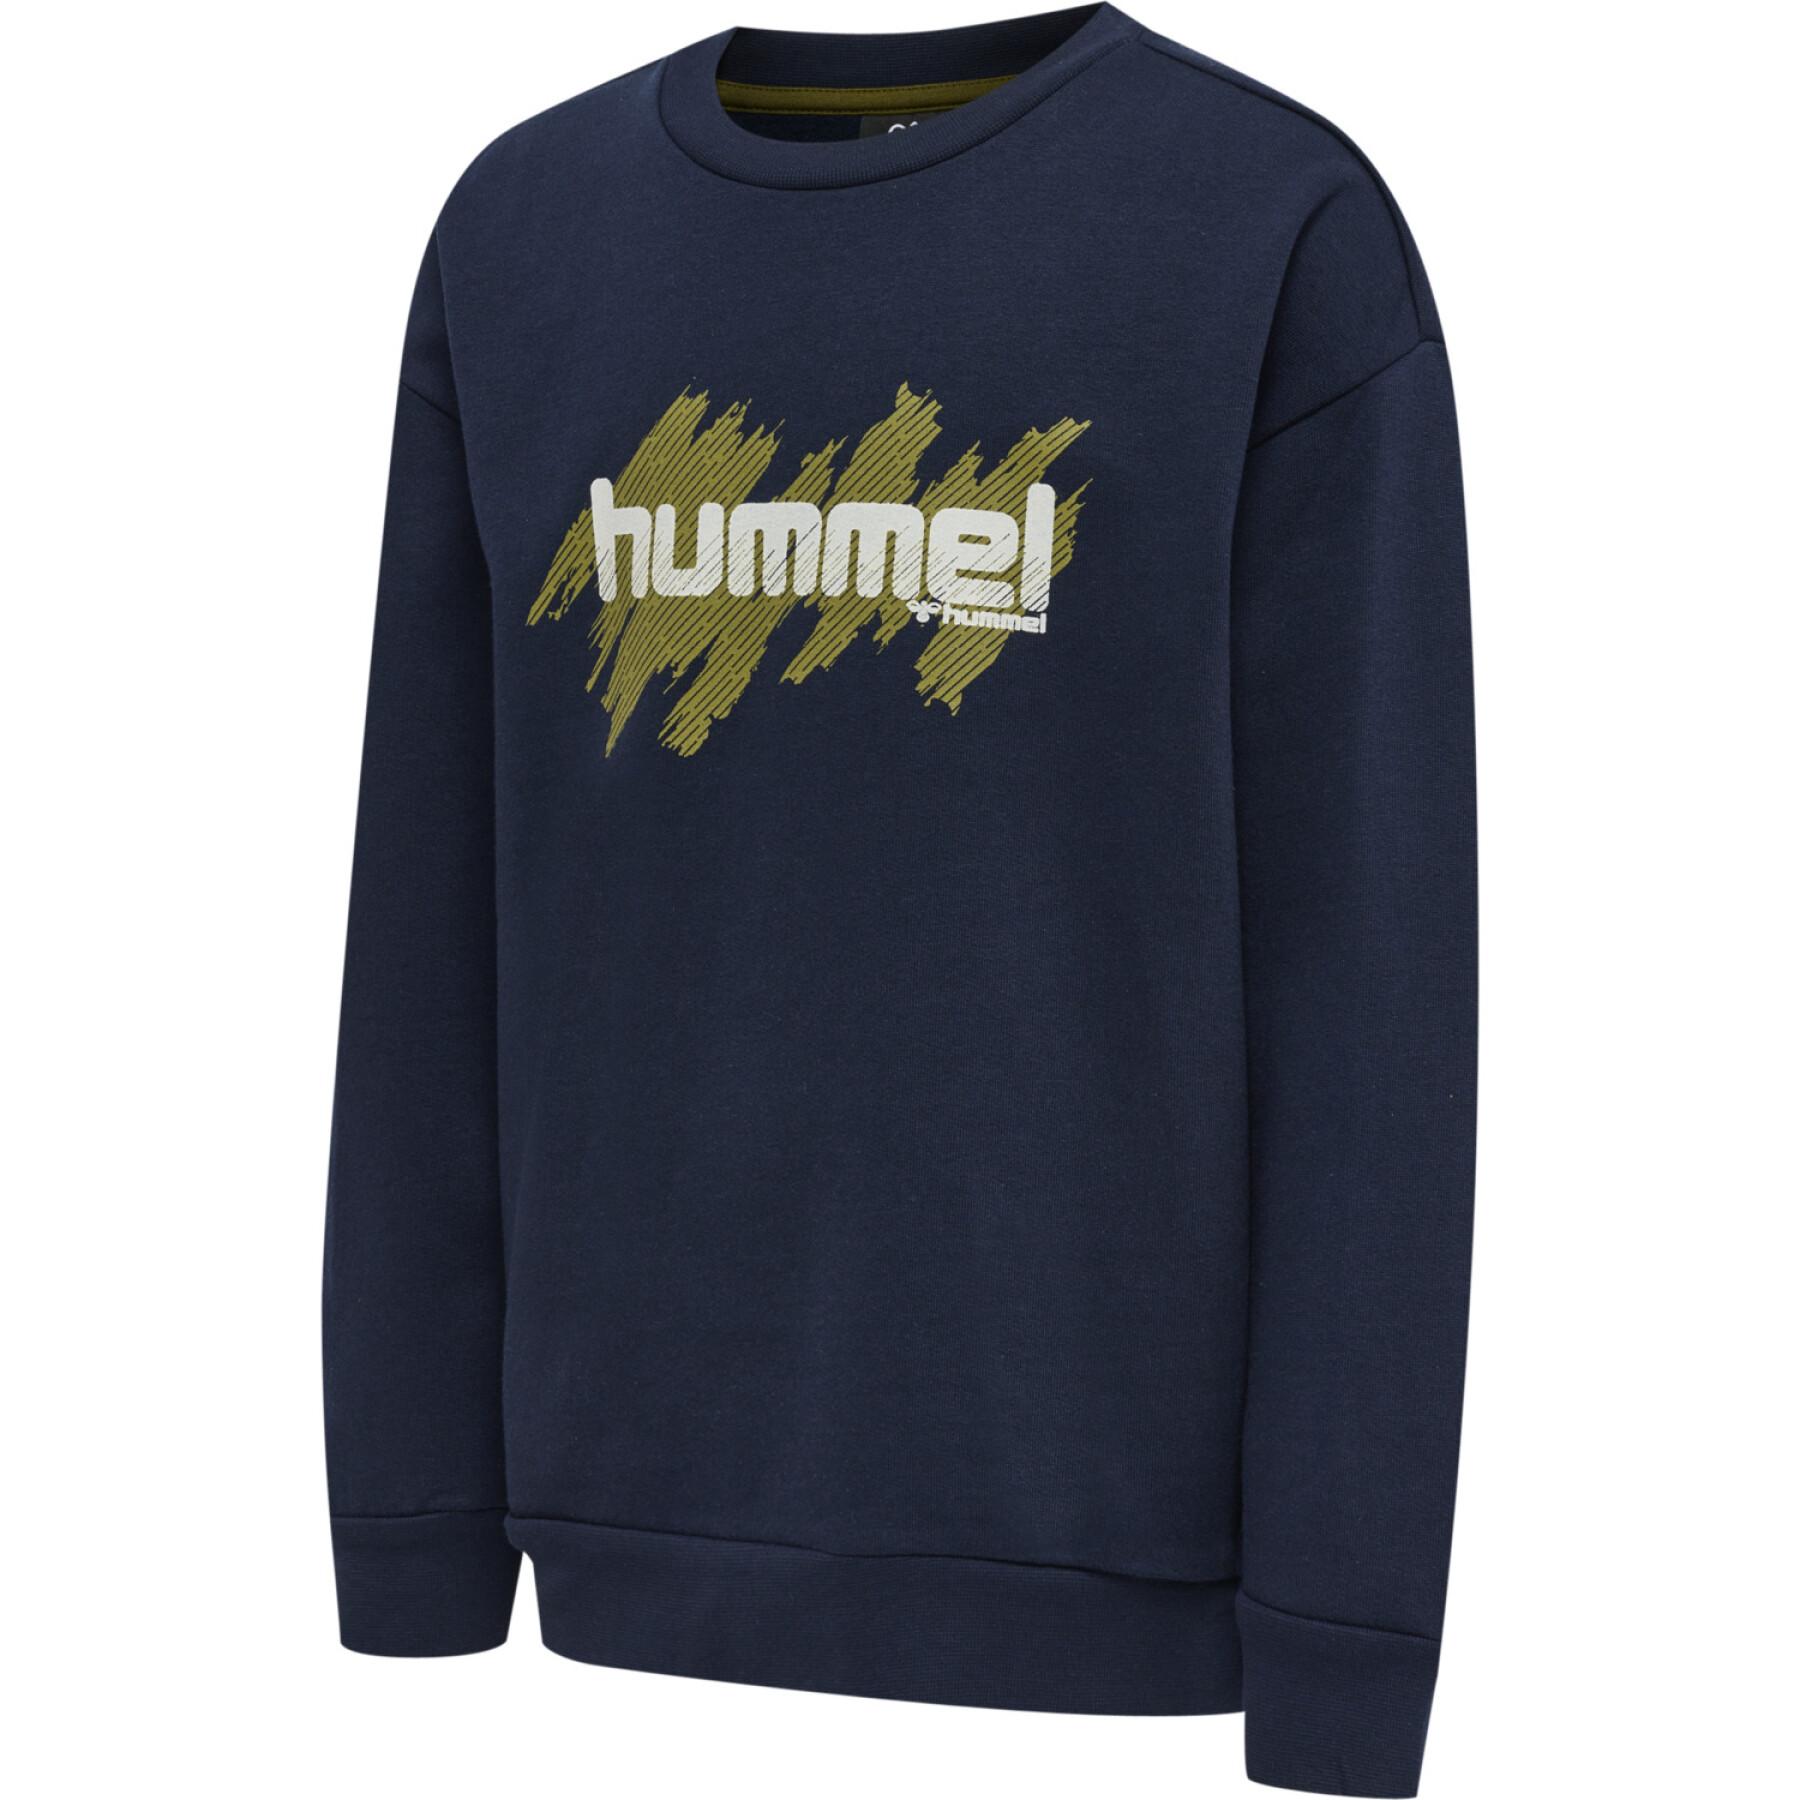 Sweatshirt child Hummel Jarrie